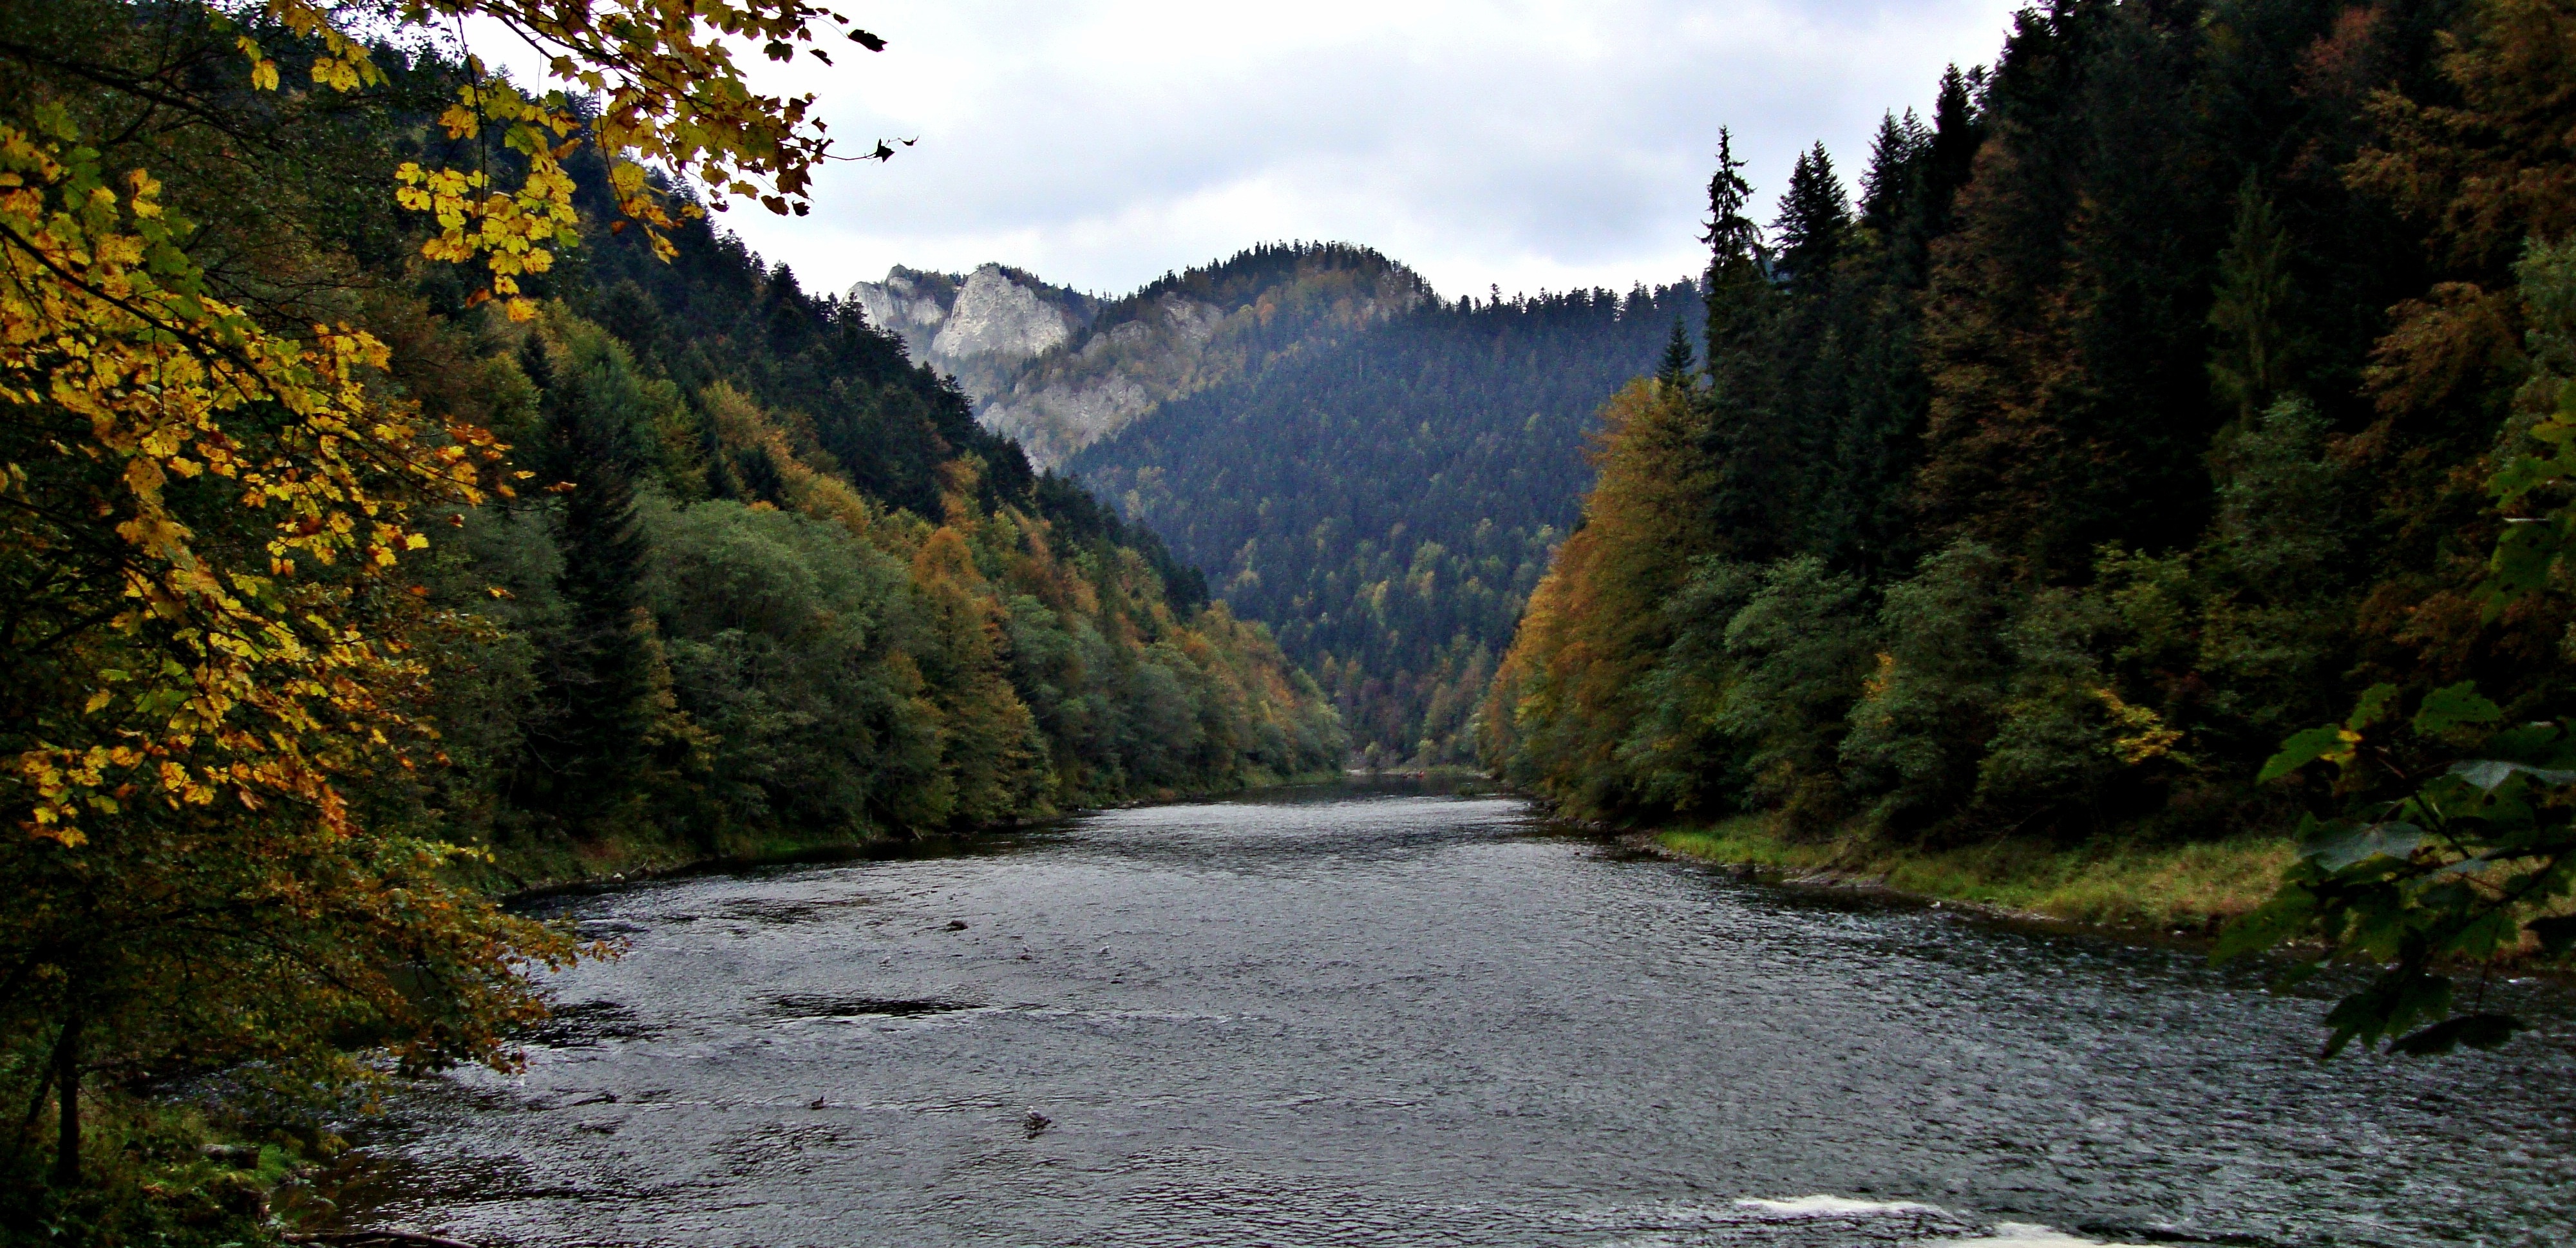 river in between pine trees